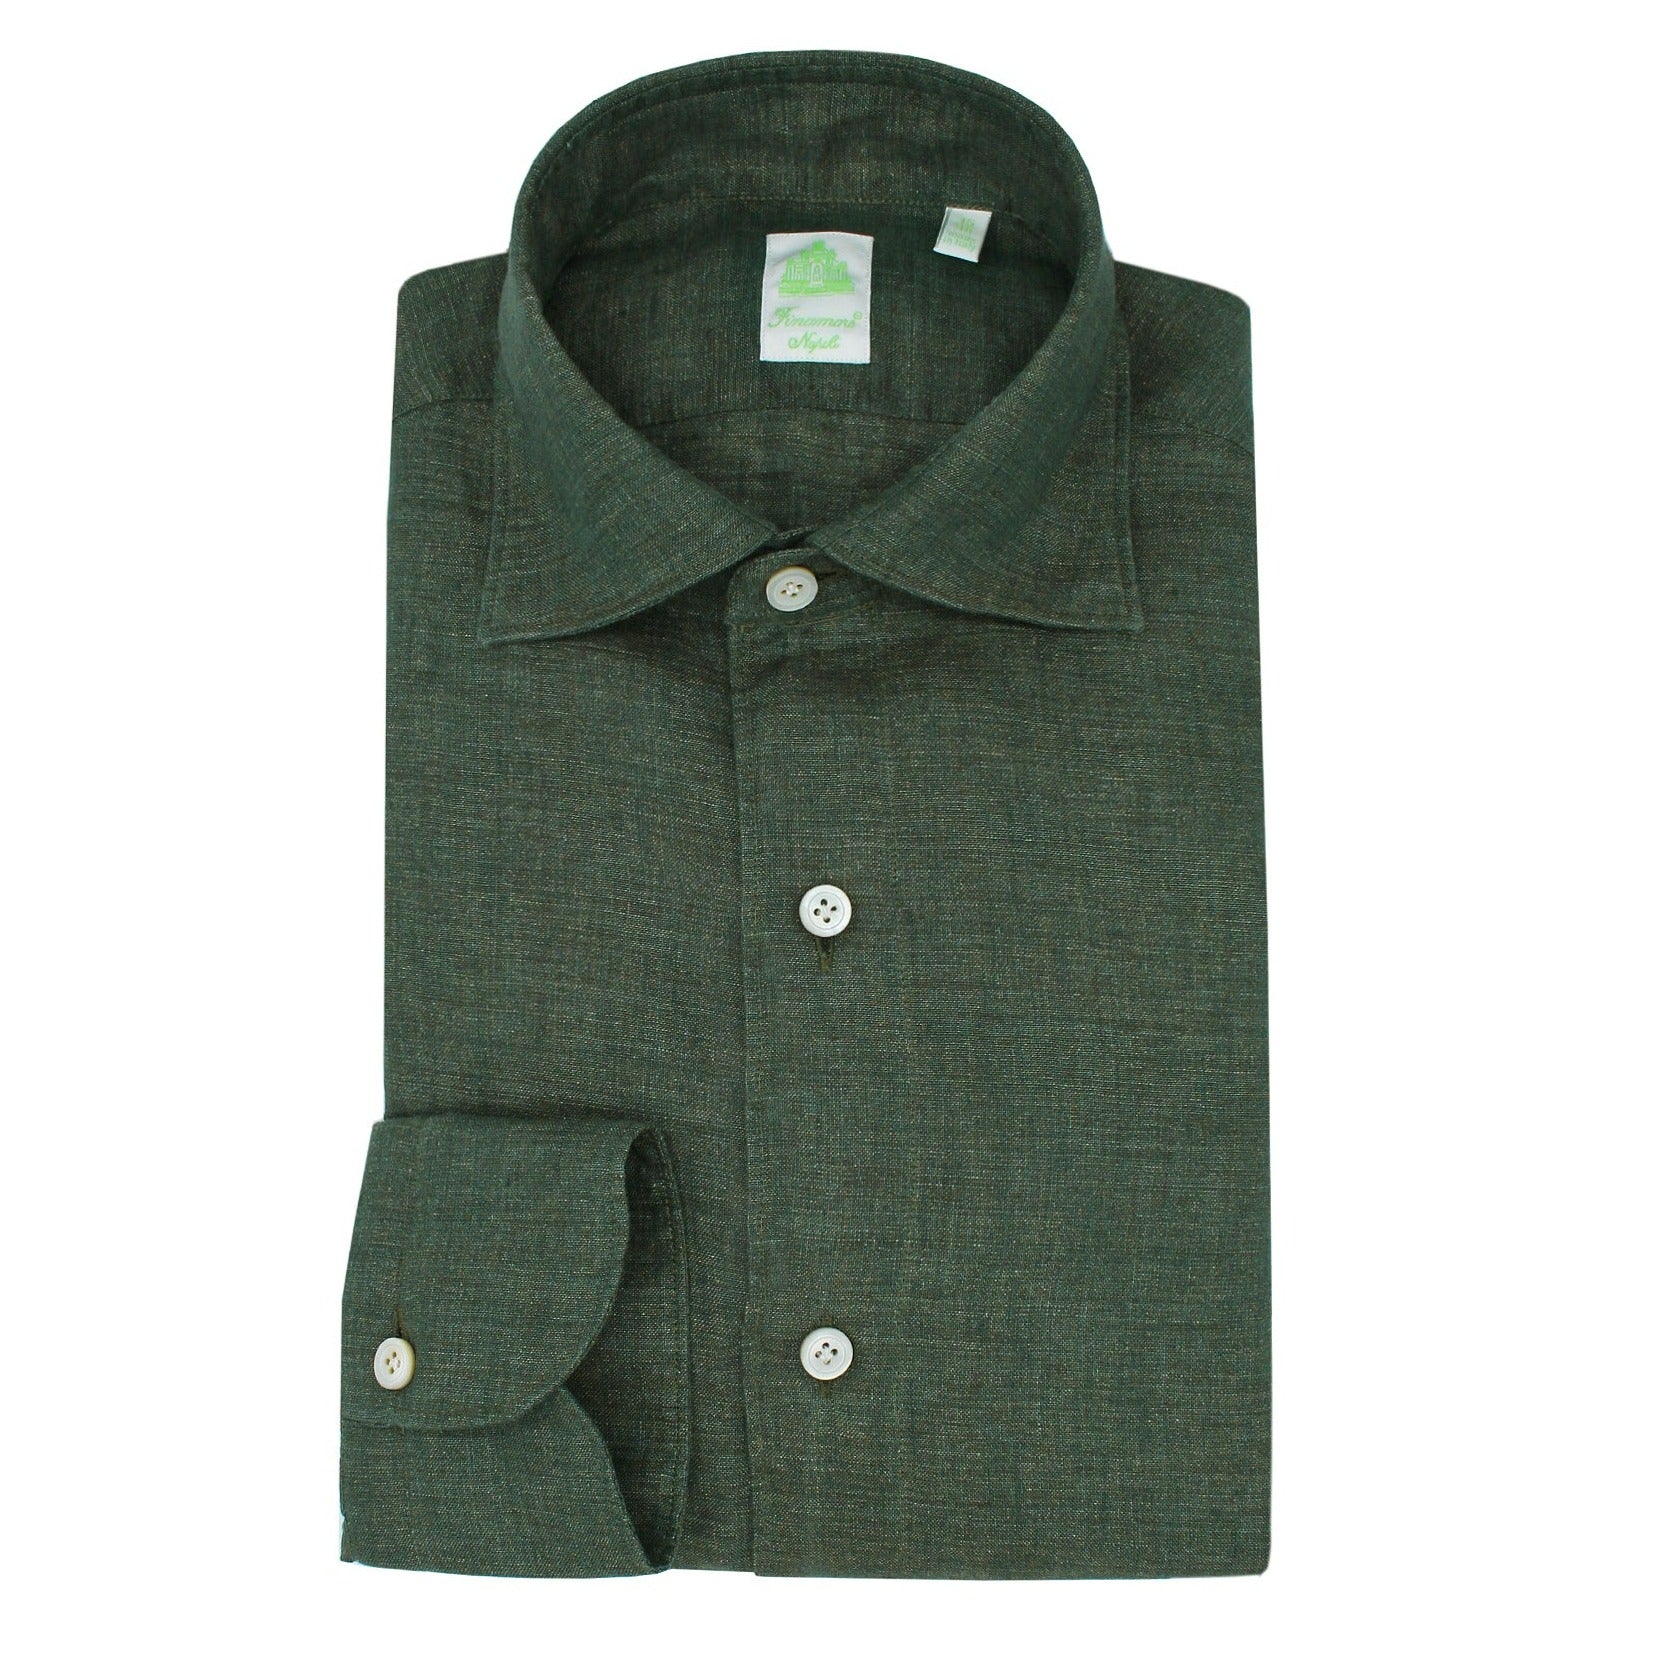 Tokio slim fit shirt in green linen